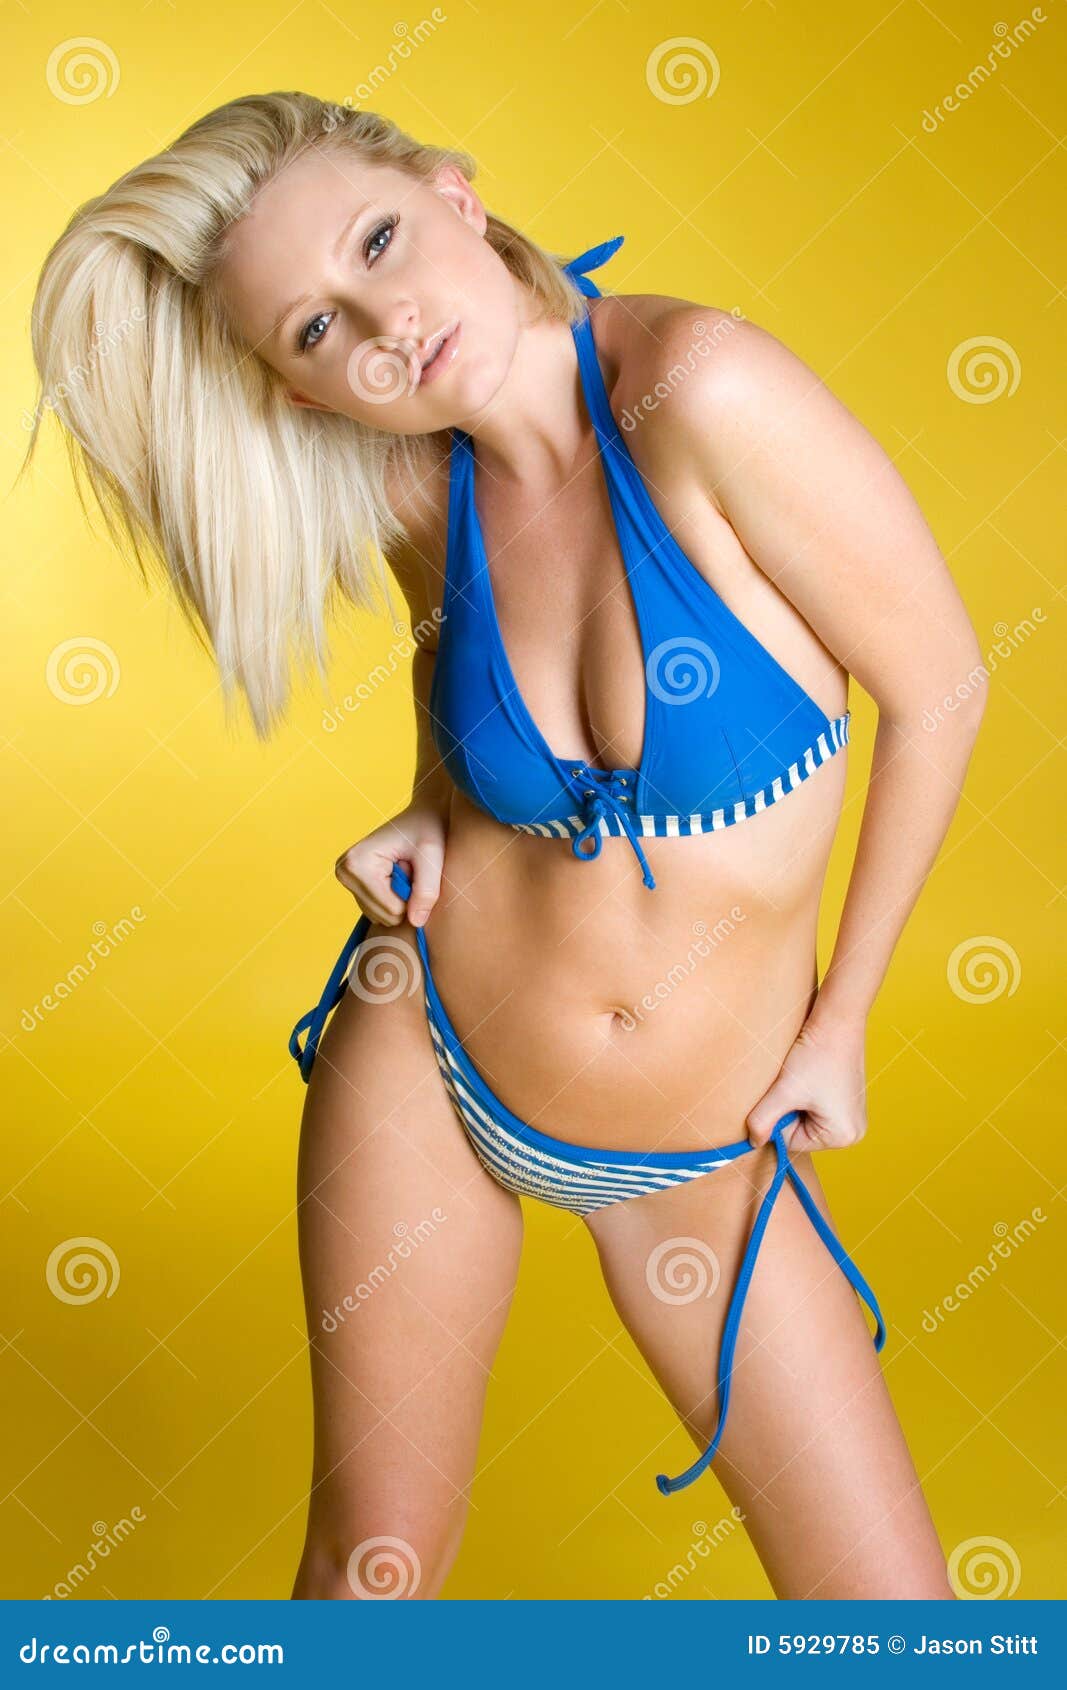 124 Blond Teen Girls Bikini Stock Photos - Free & Royalty-Free